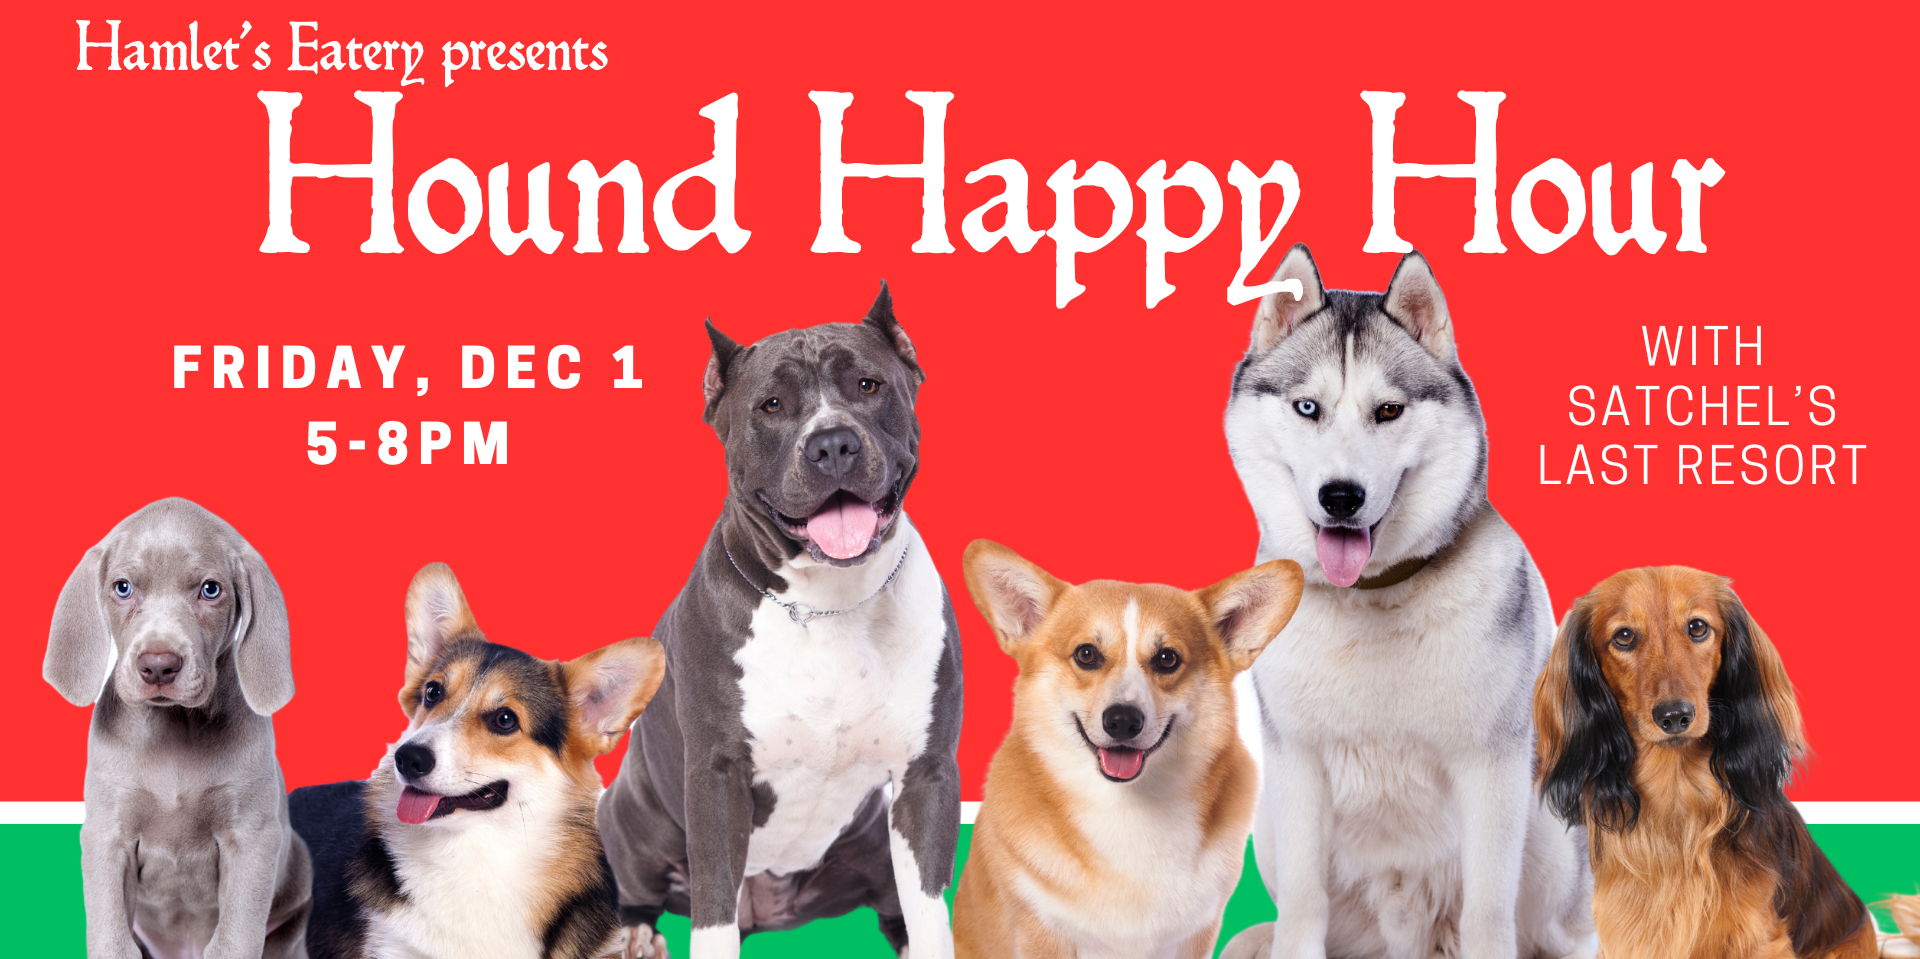 Hound Happy Hour & Holiday Shopping promotional image